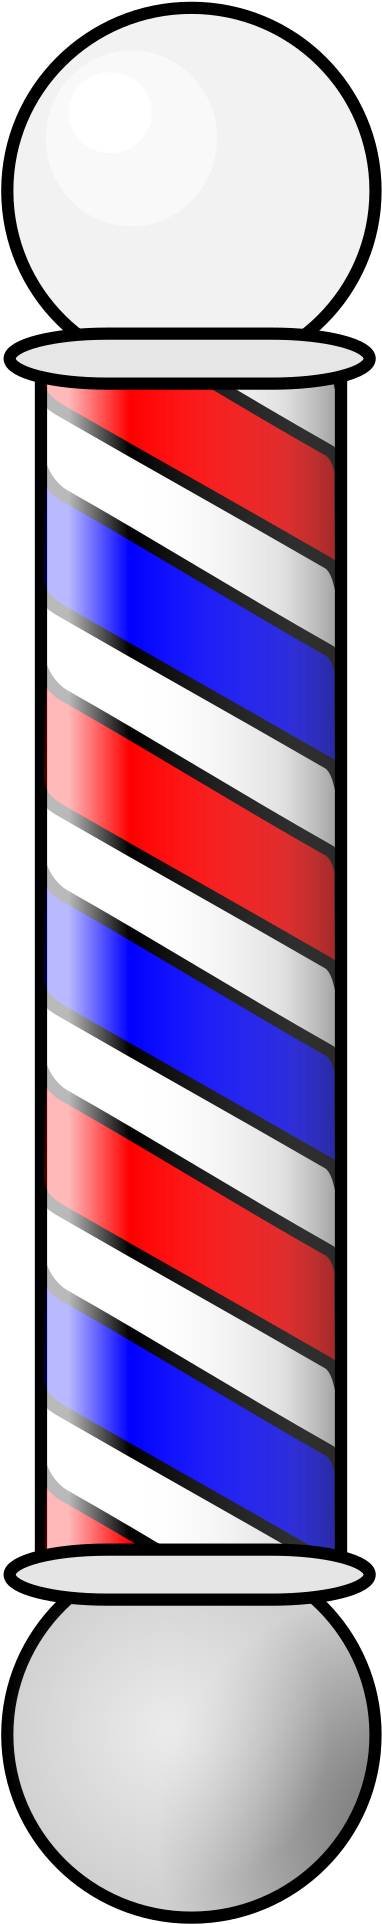 Barbershop Pole 2 Animation - Free Barber Pole Clipart (800x2400)